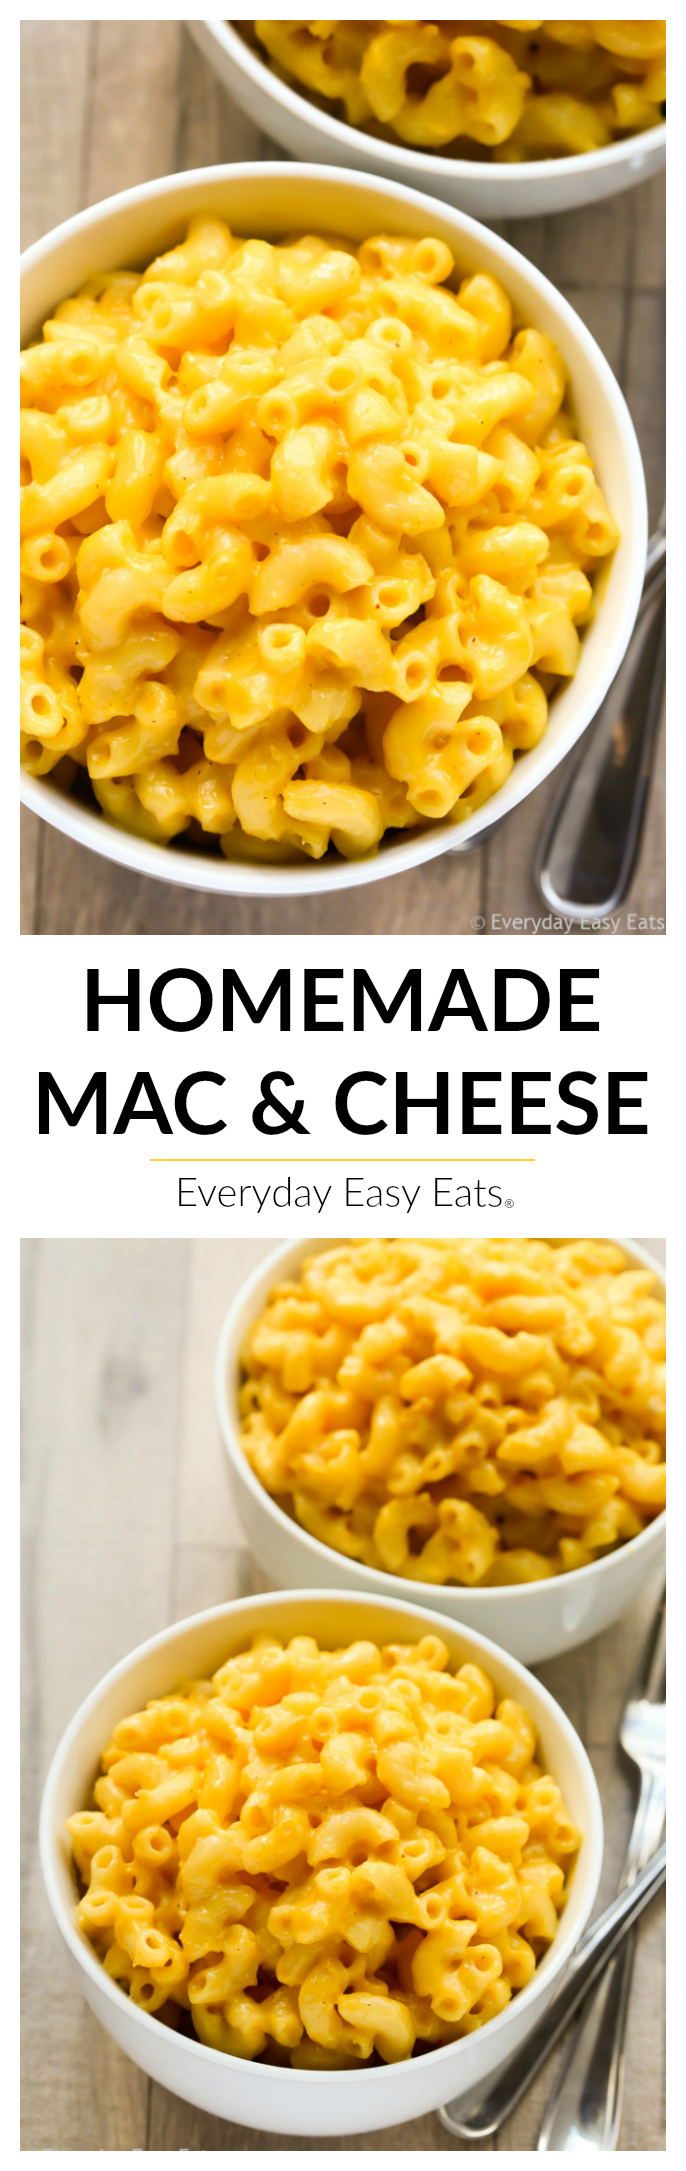 Easy, Homemade Macaroni and Cheese | Recipe at EverydayEasyEats.com